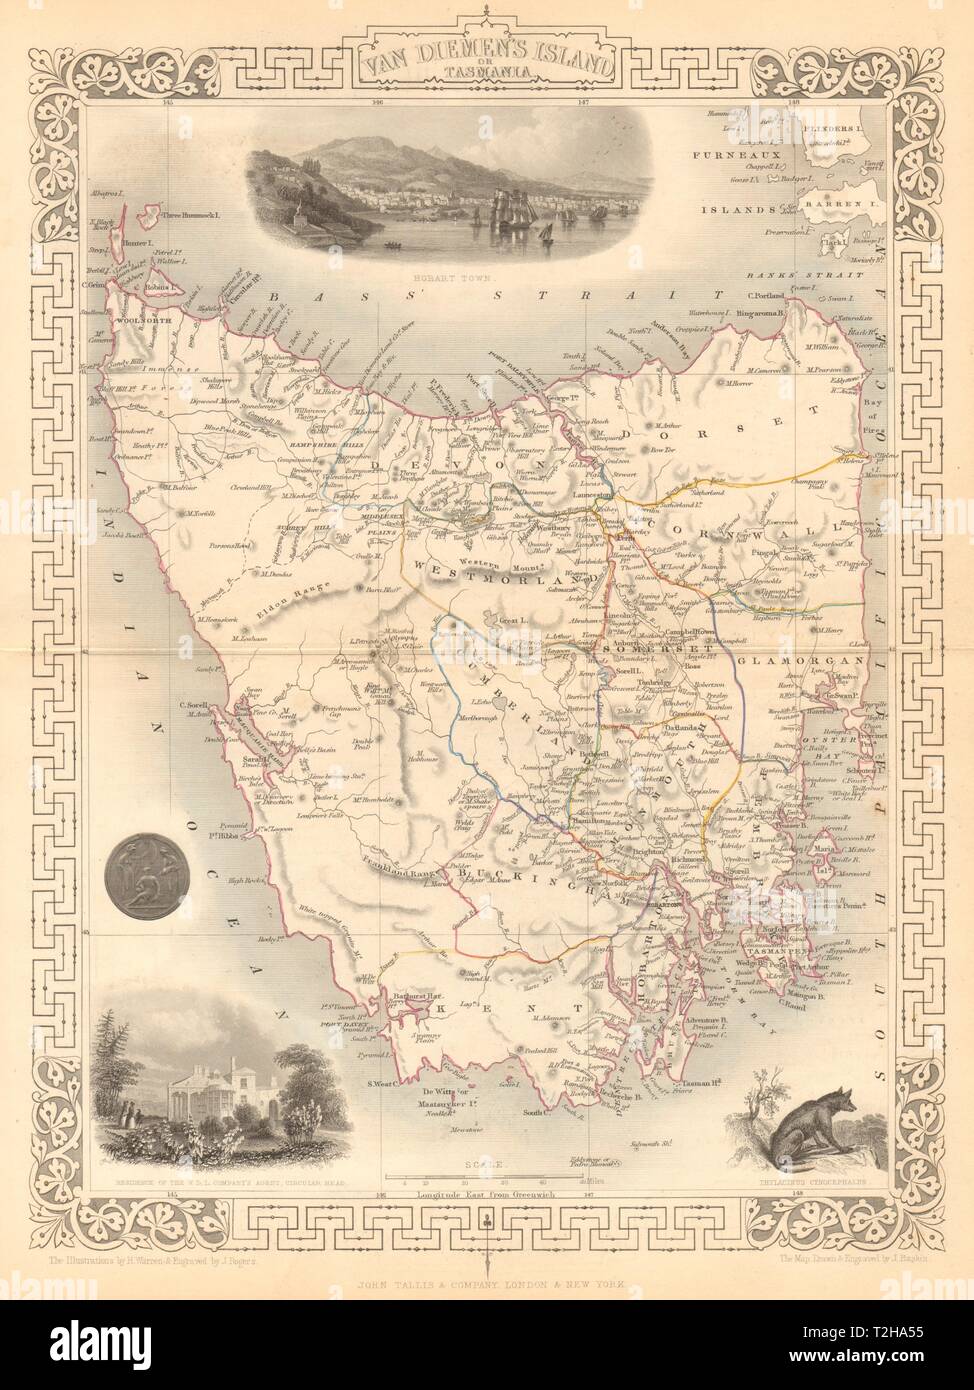 VAN DIEMEN'S ISLAND OR TASMANIA. Shows extinct Thylacine.TALLIS/RAPKIN 1849 map Stock Photo